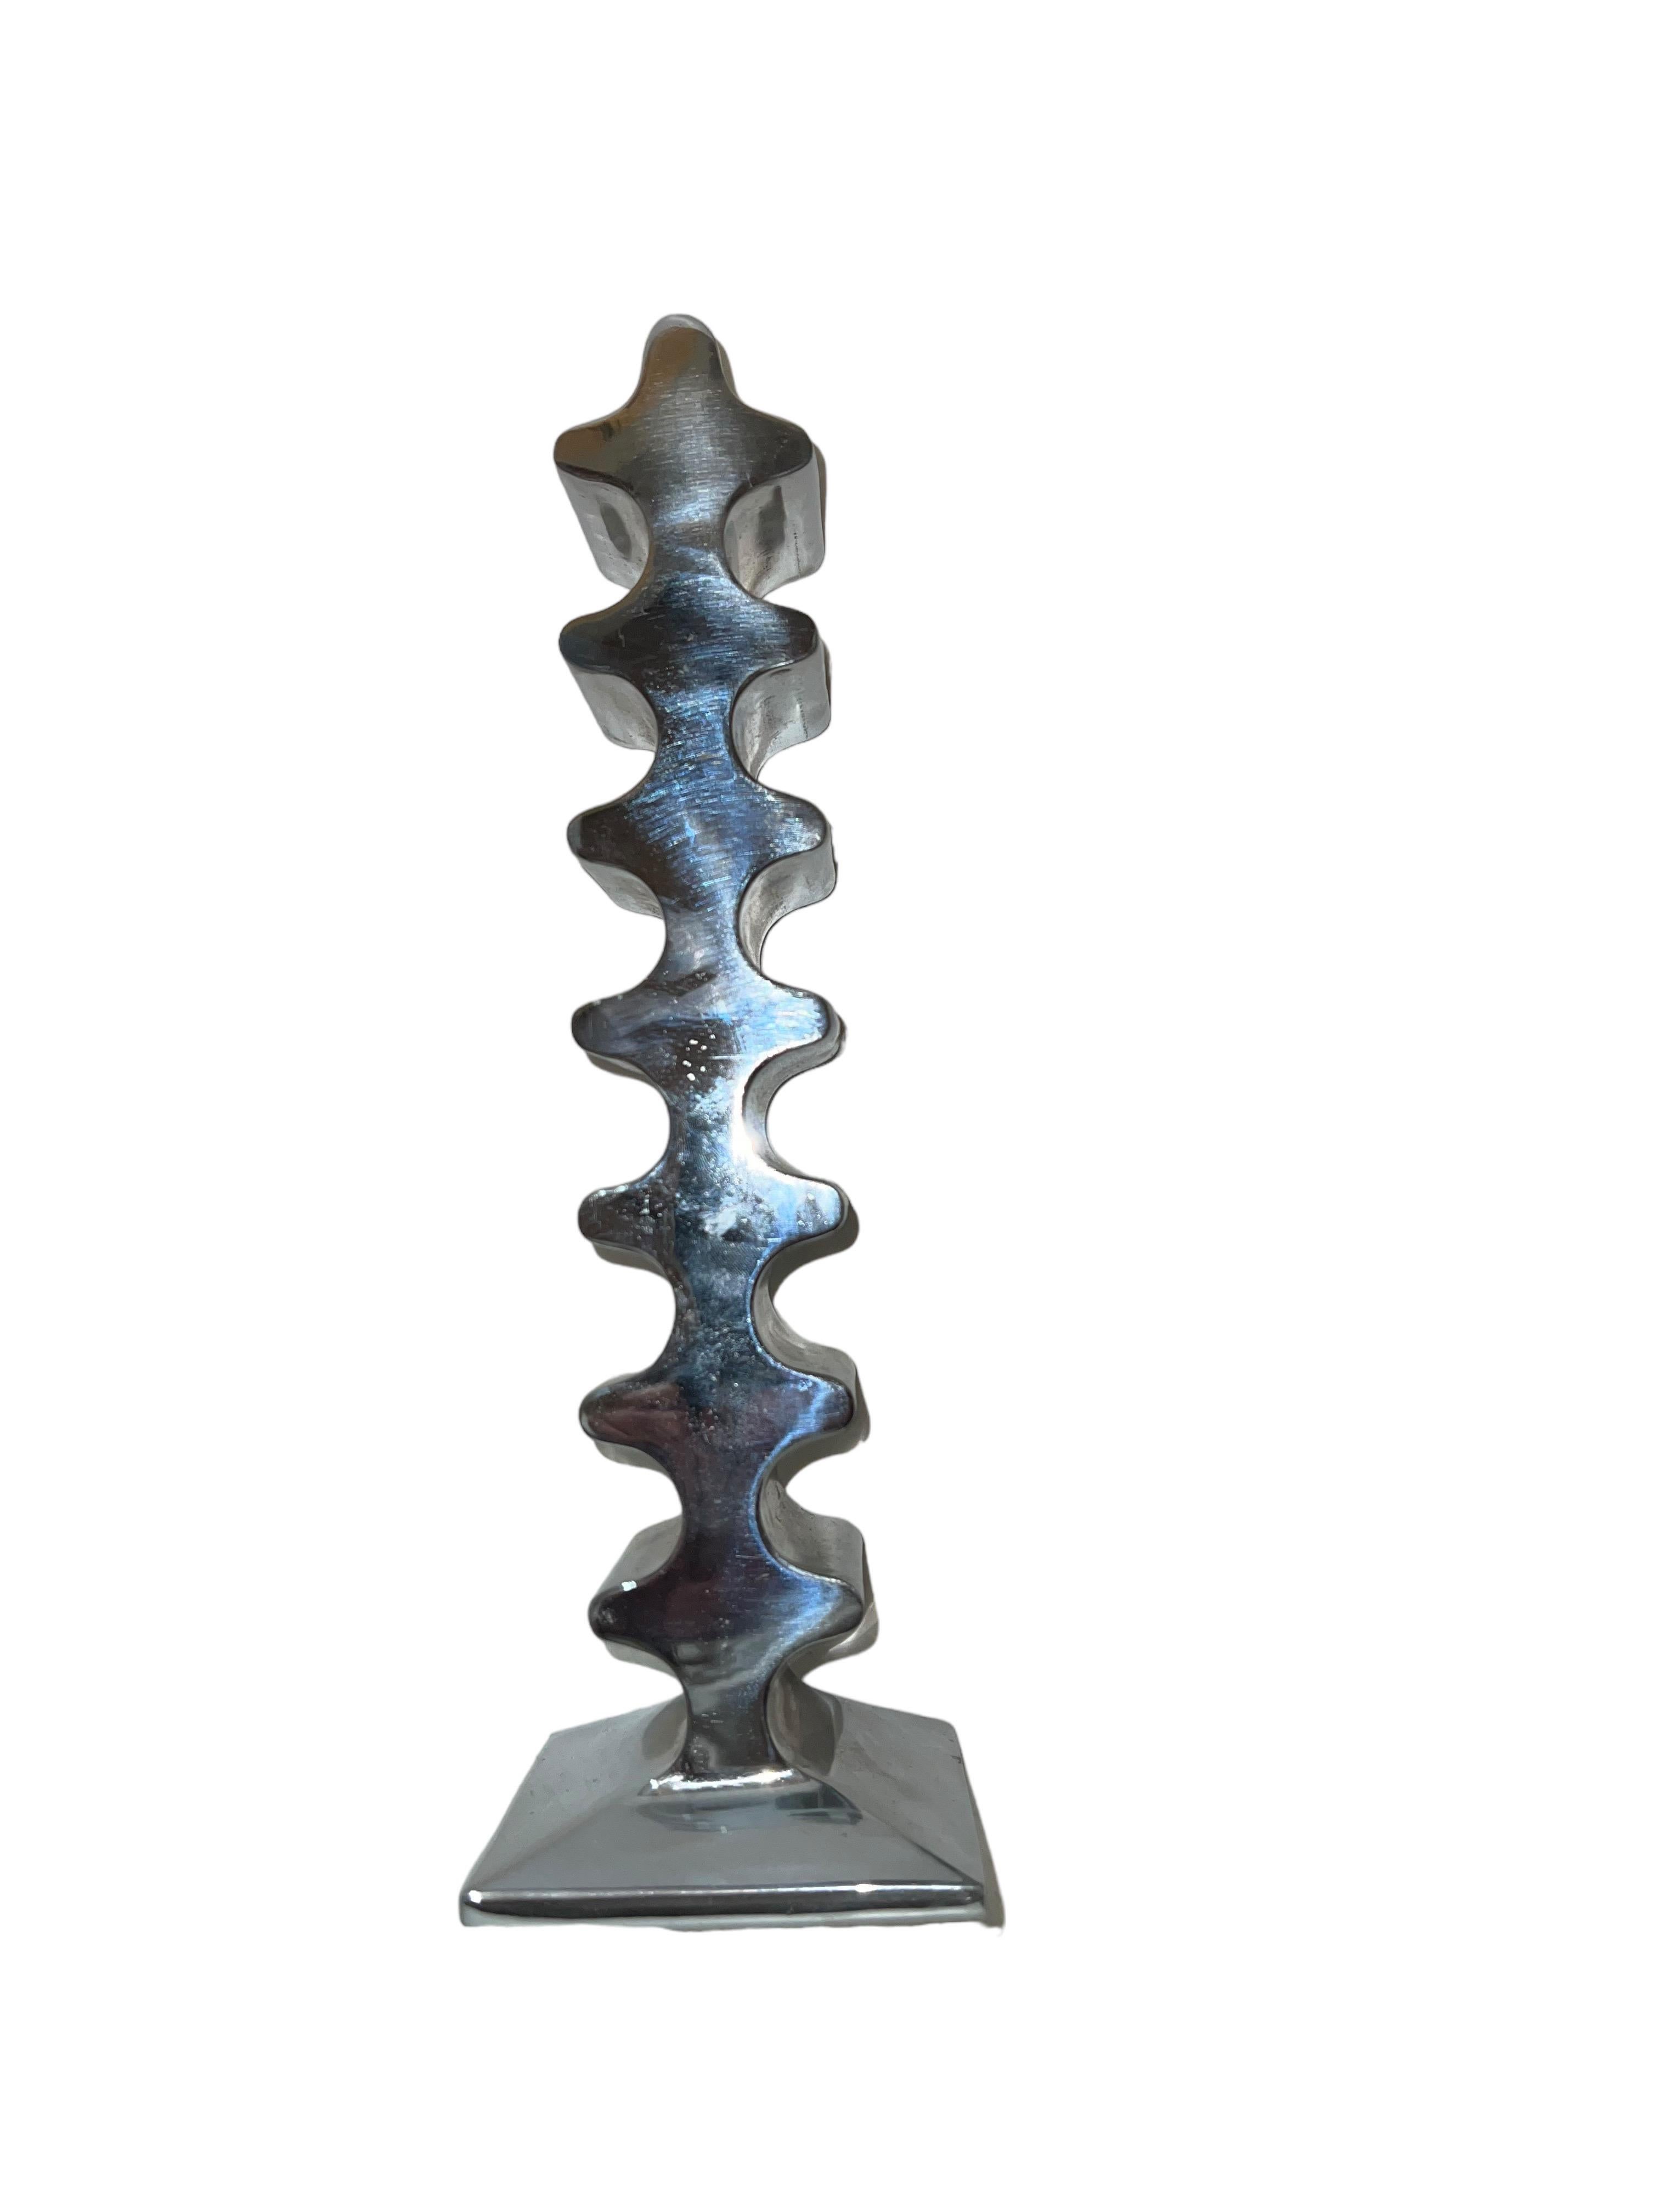 Latin American Abstract Geometric Chrome Bronze Architectural Sculpture E. Tafur For Sale 3